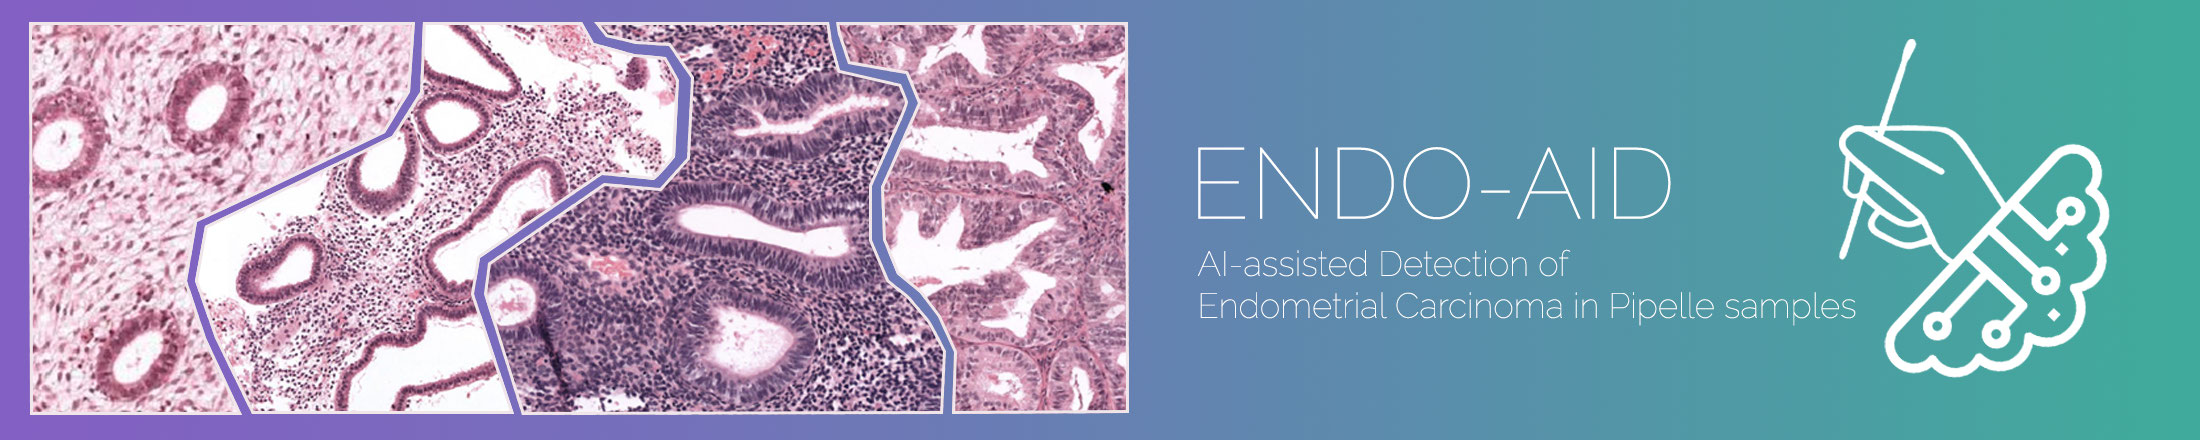 Endometrial Carcinoma Detection in Pipelle biopsies Banner